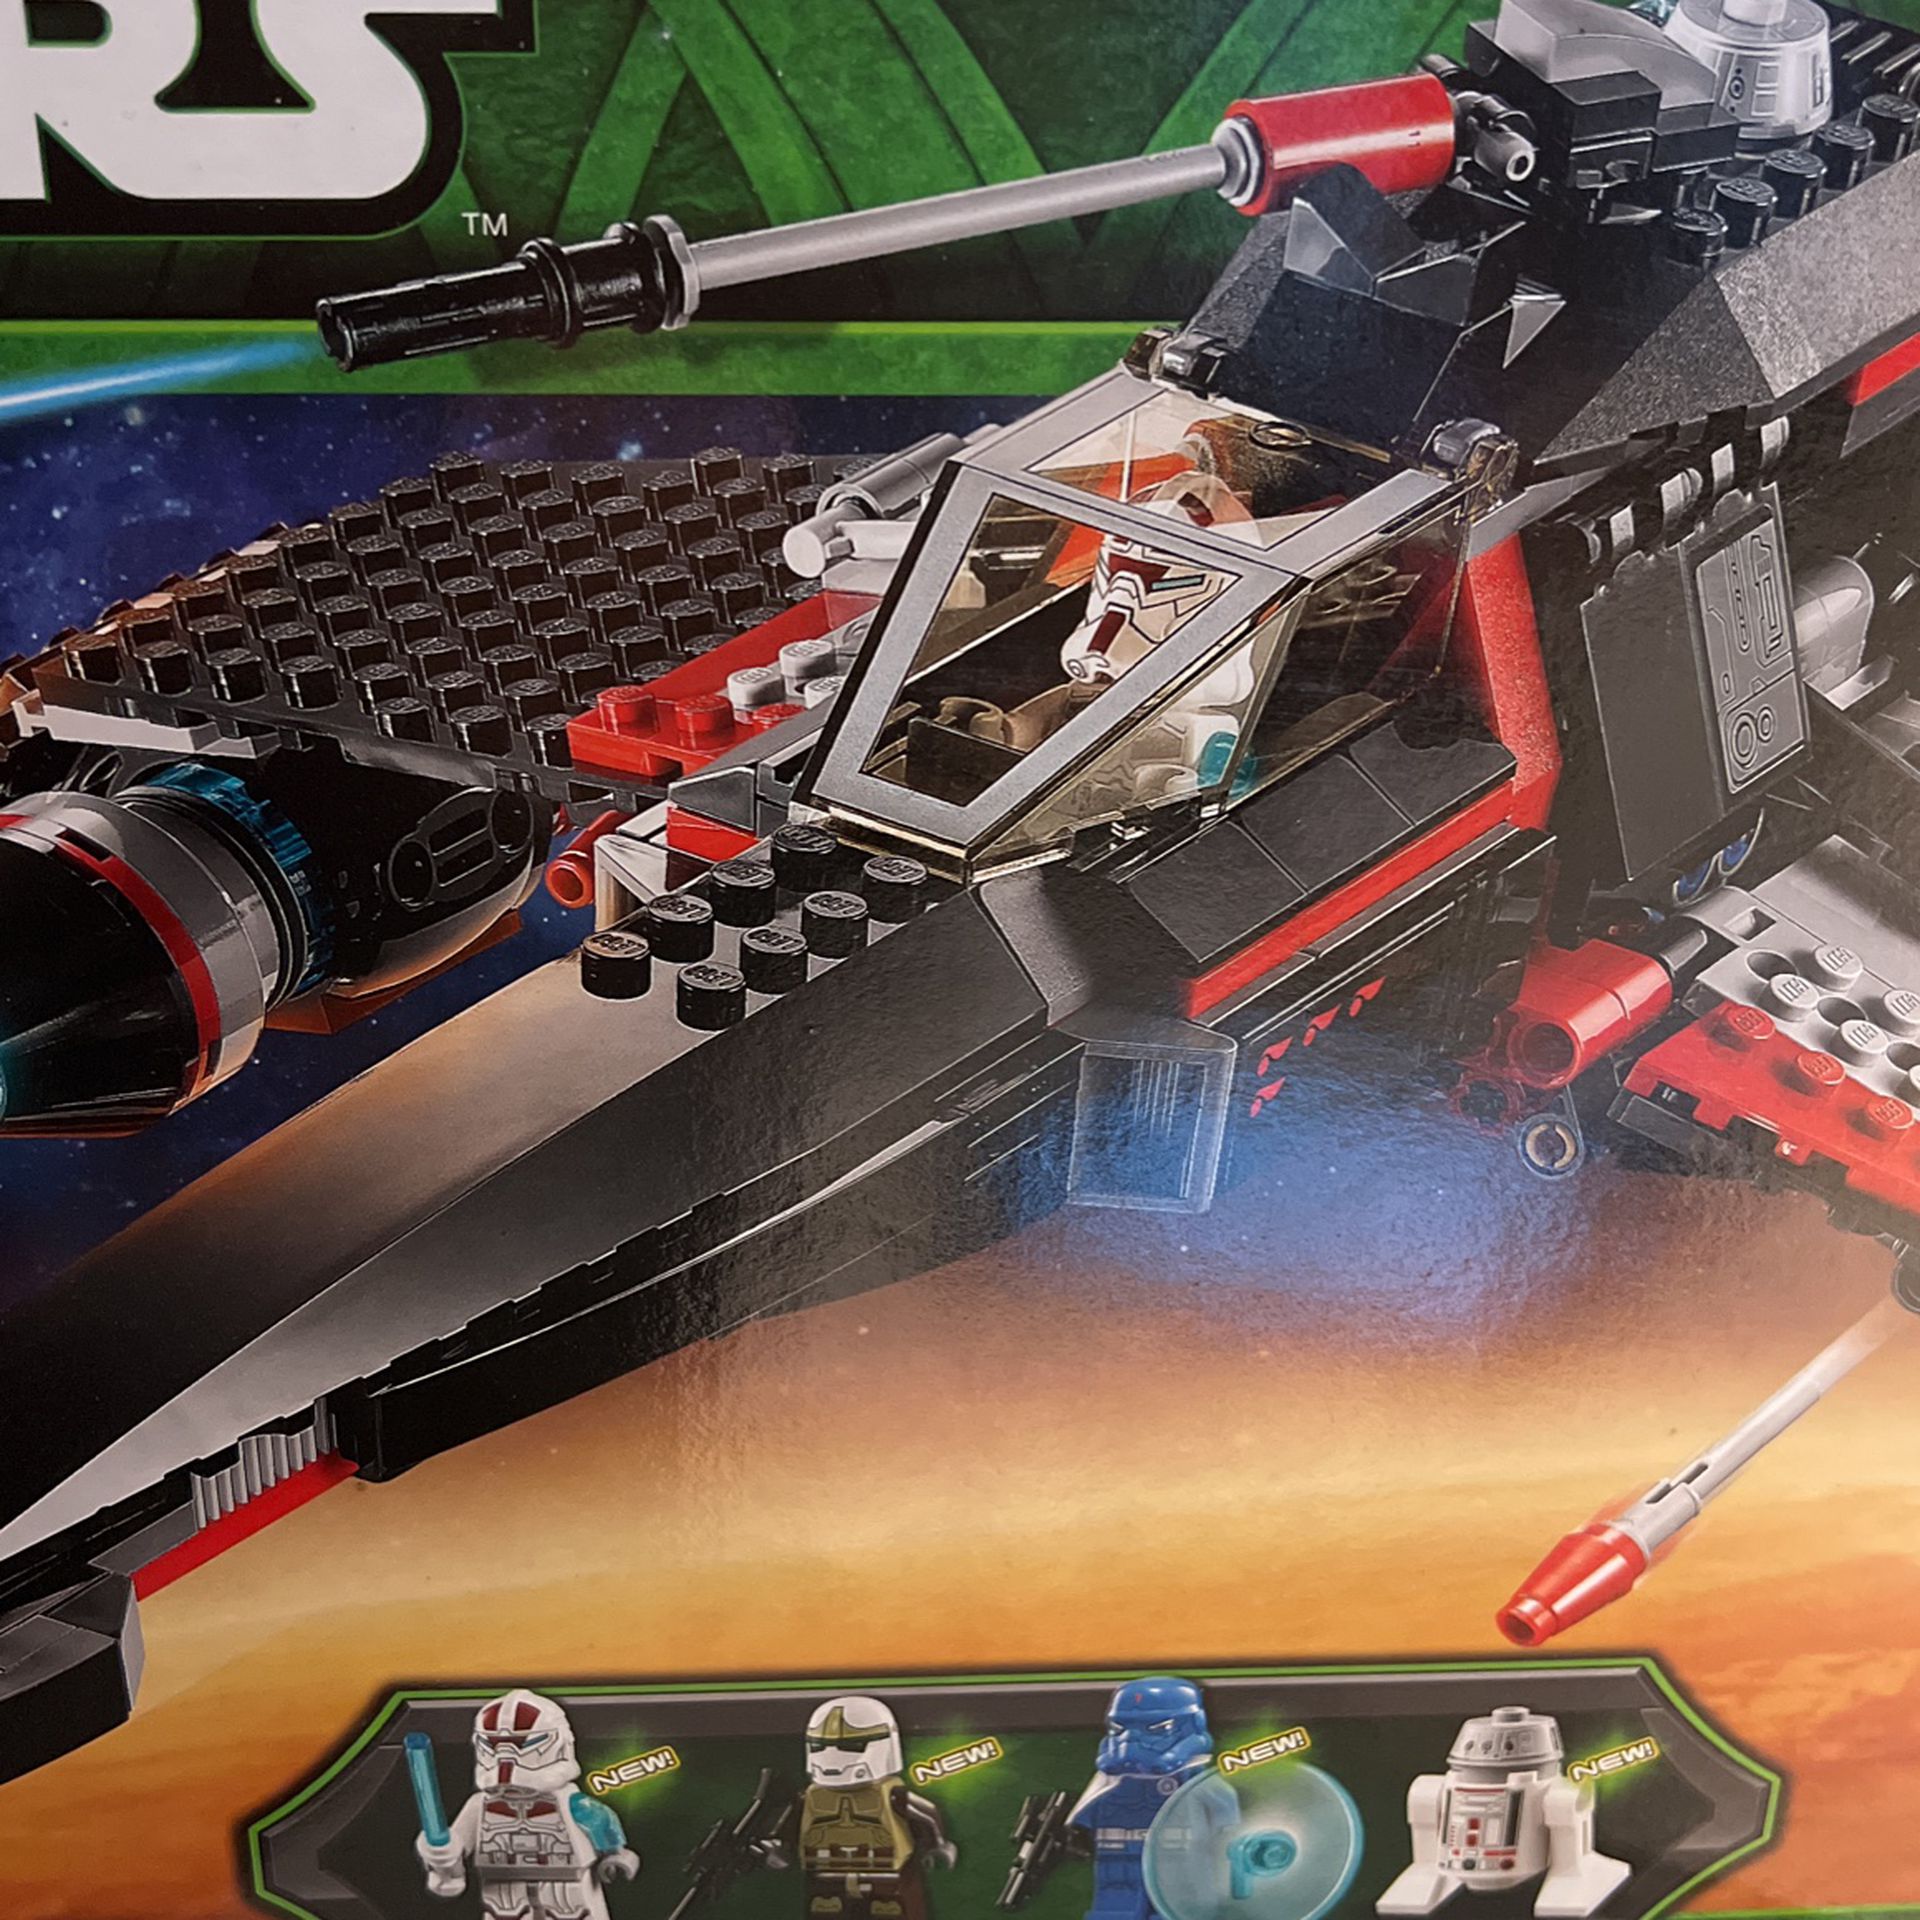 Lego Star Wars 75018 Jerk-14's Stealth Starfighter for Sale in 